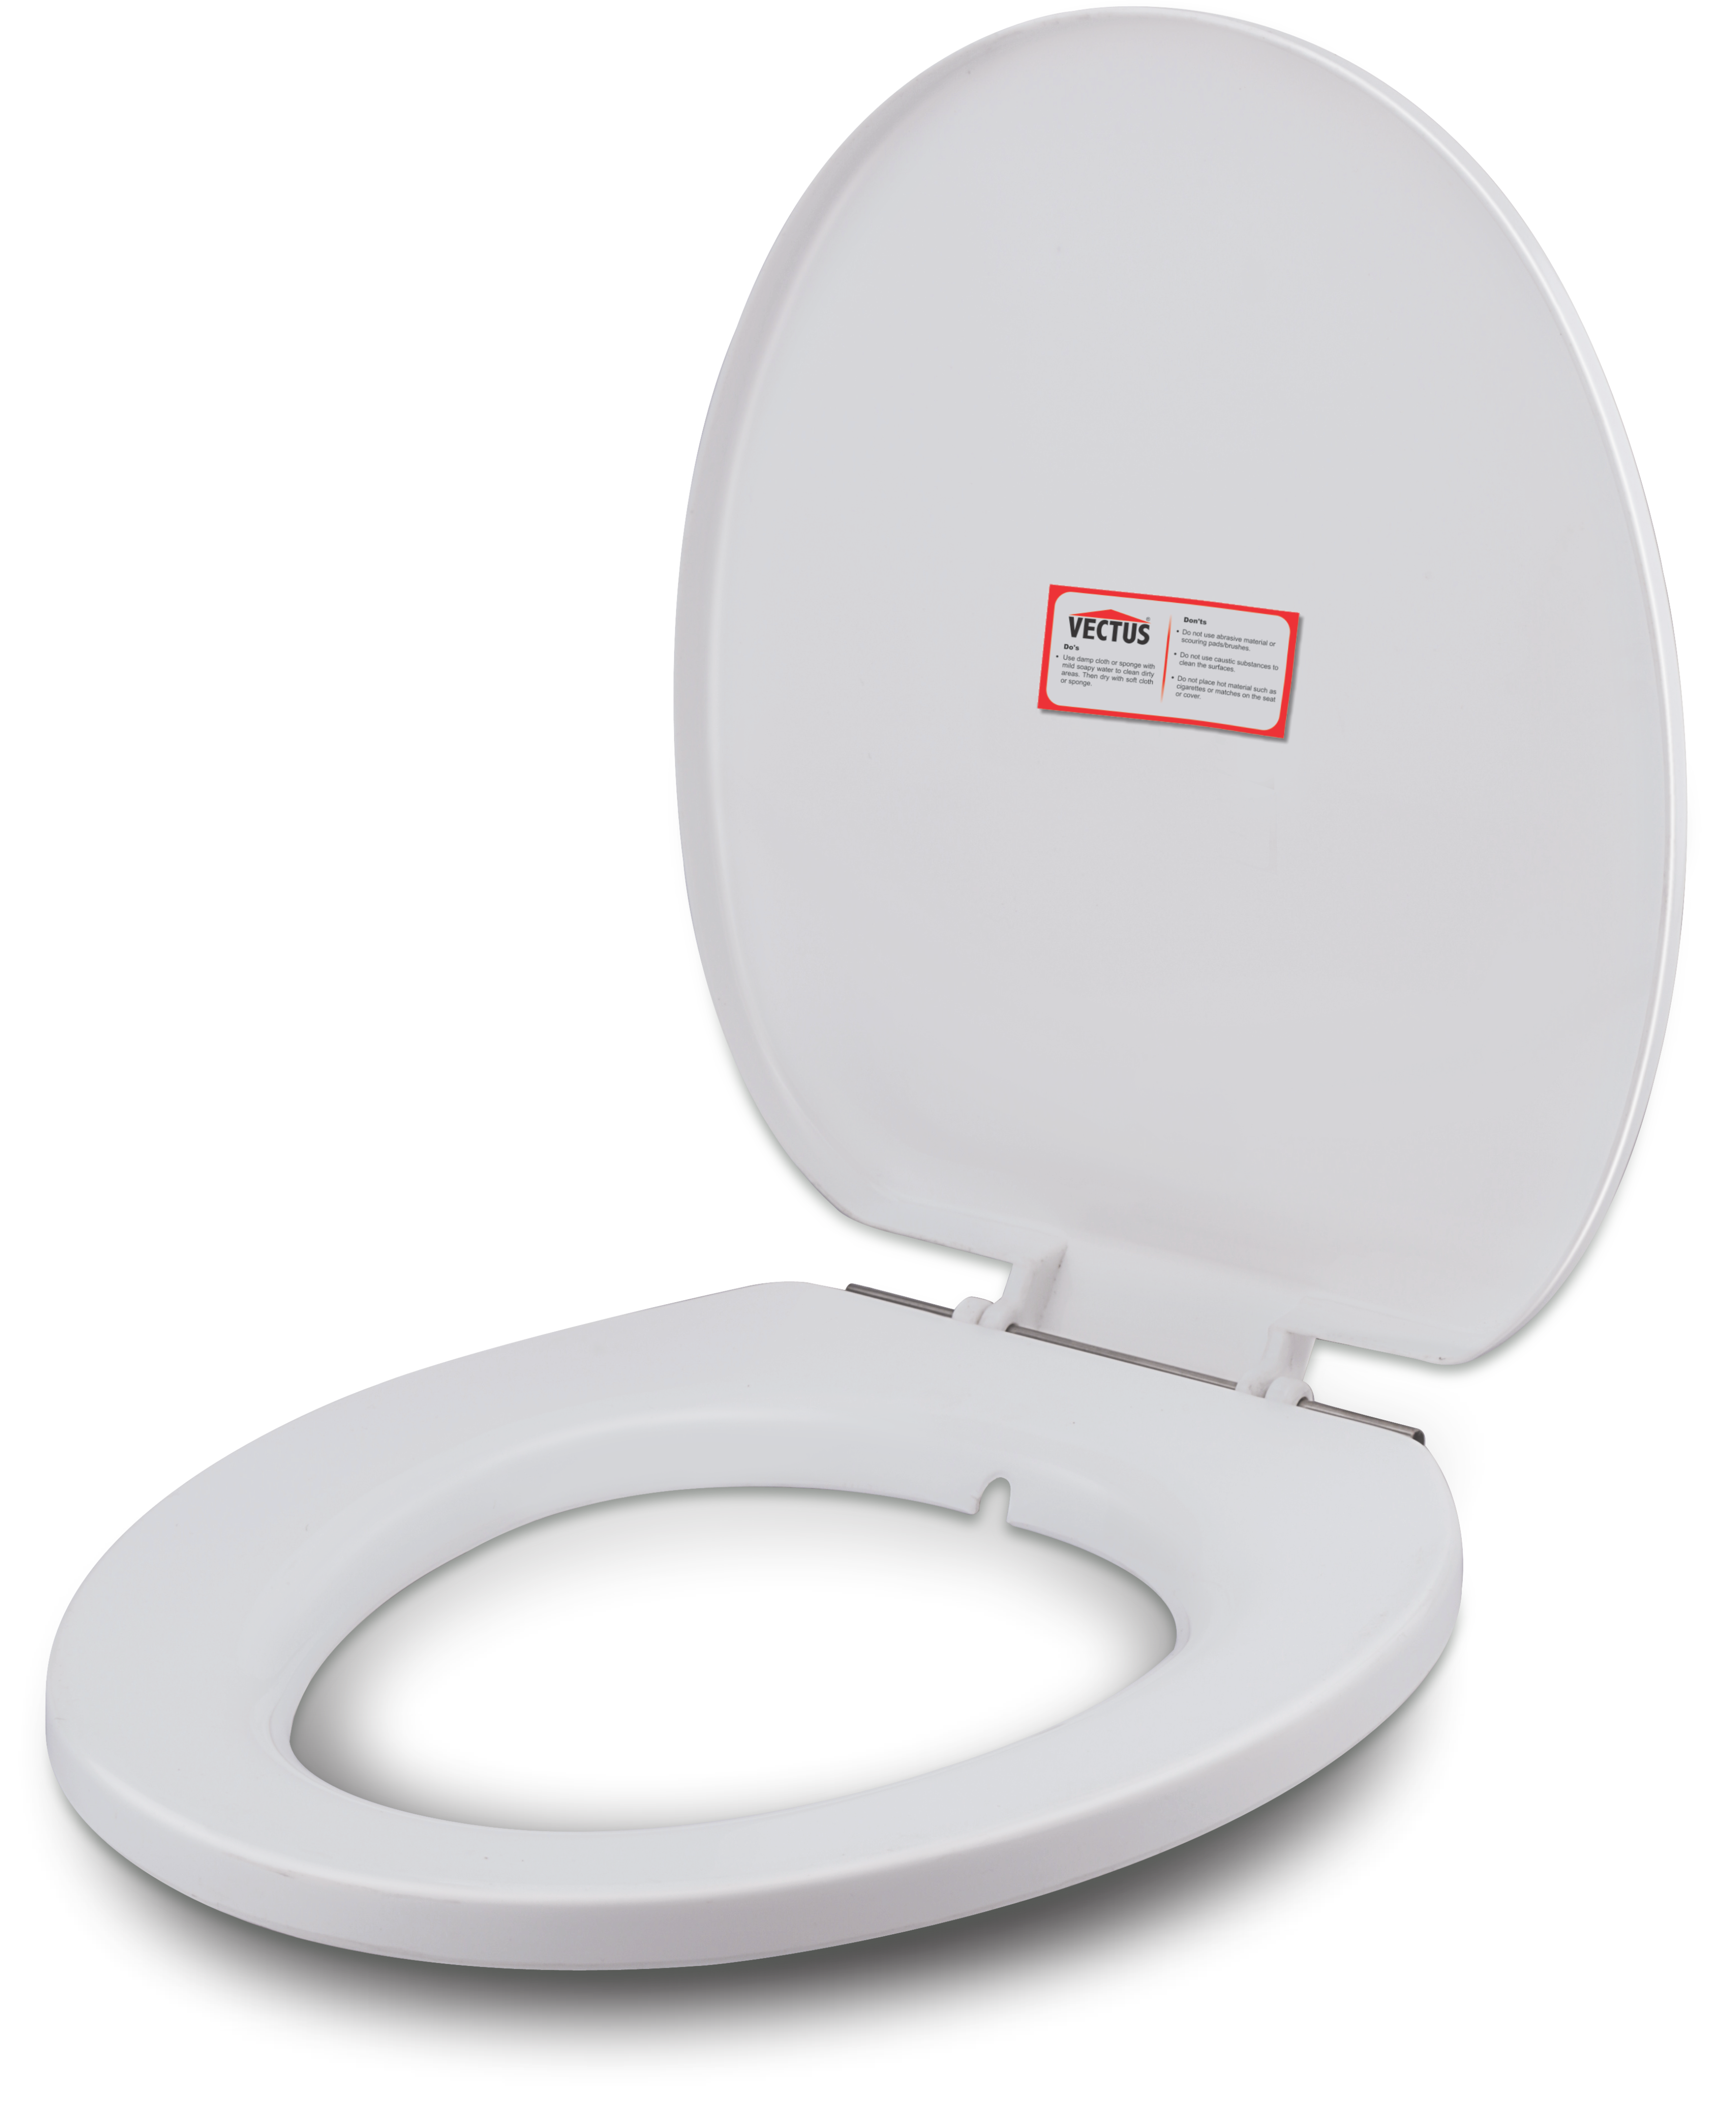 Vectus Smart Toilet Seat Cover